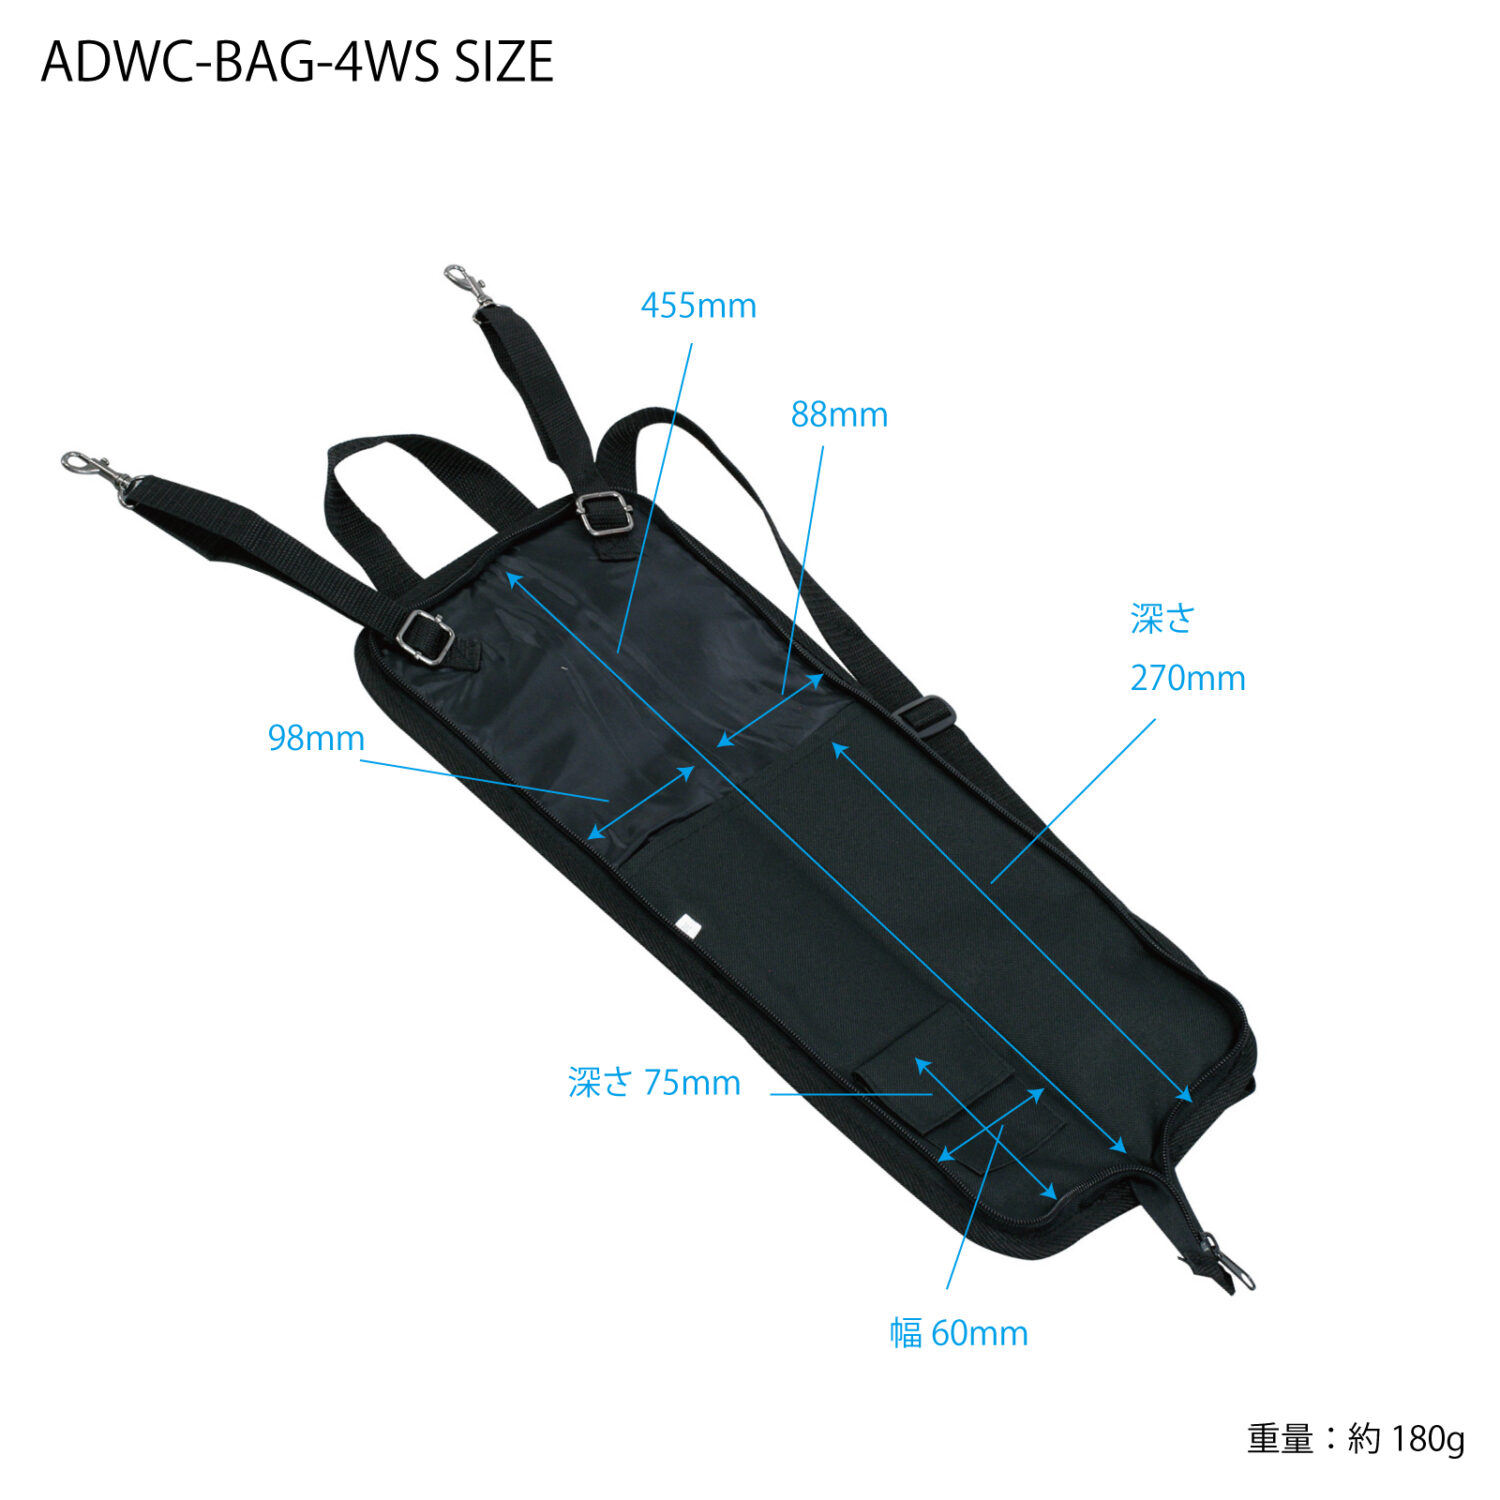 ADWC-BAG-4WS